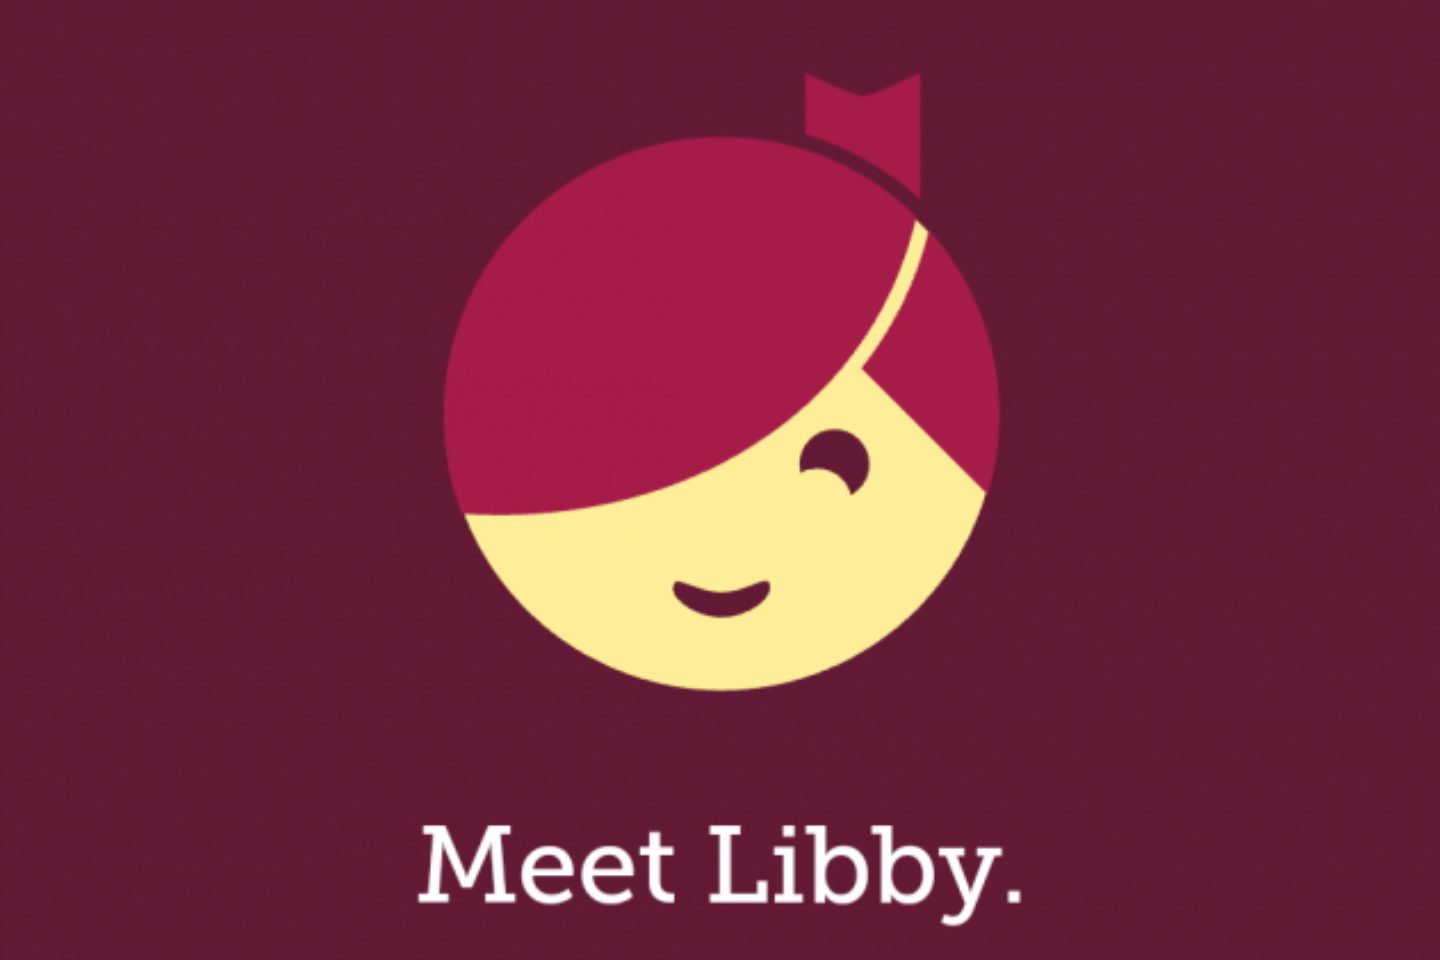 Libby app image